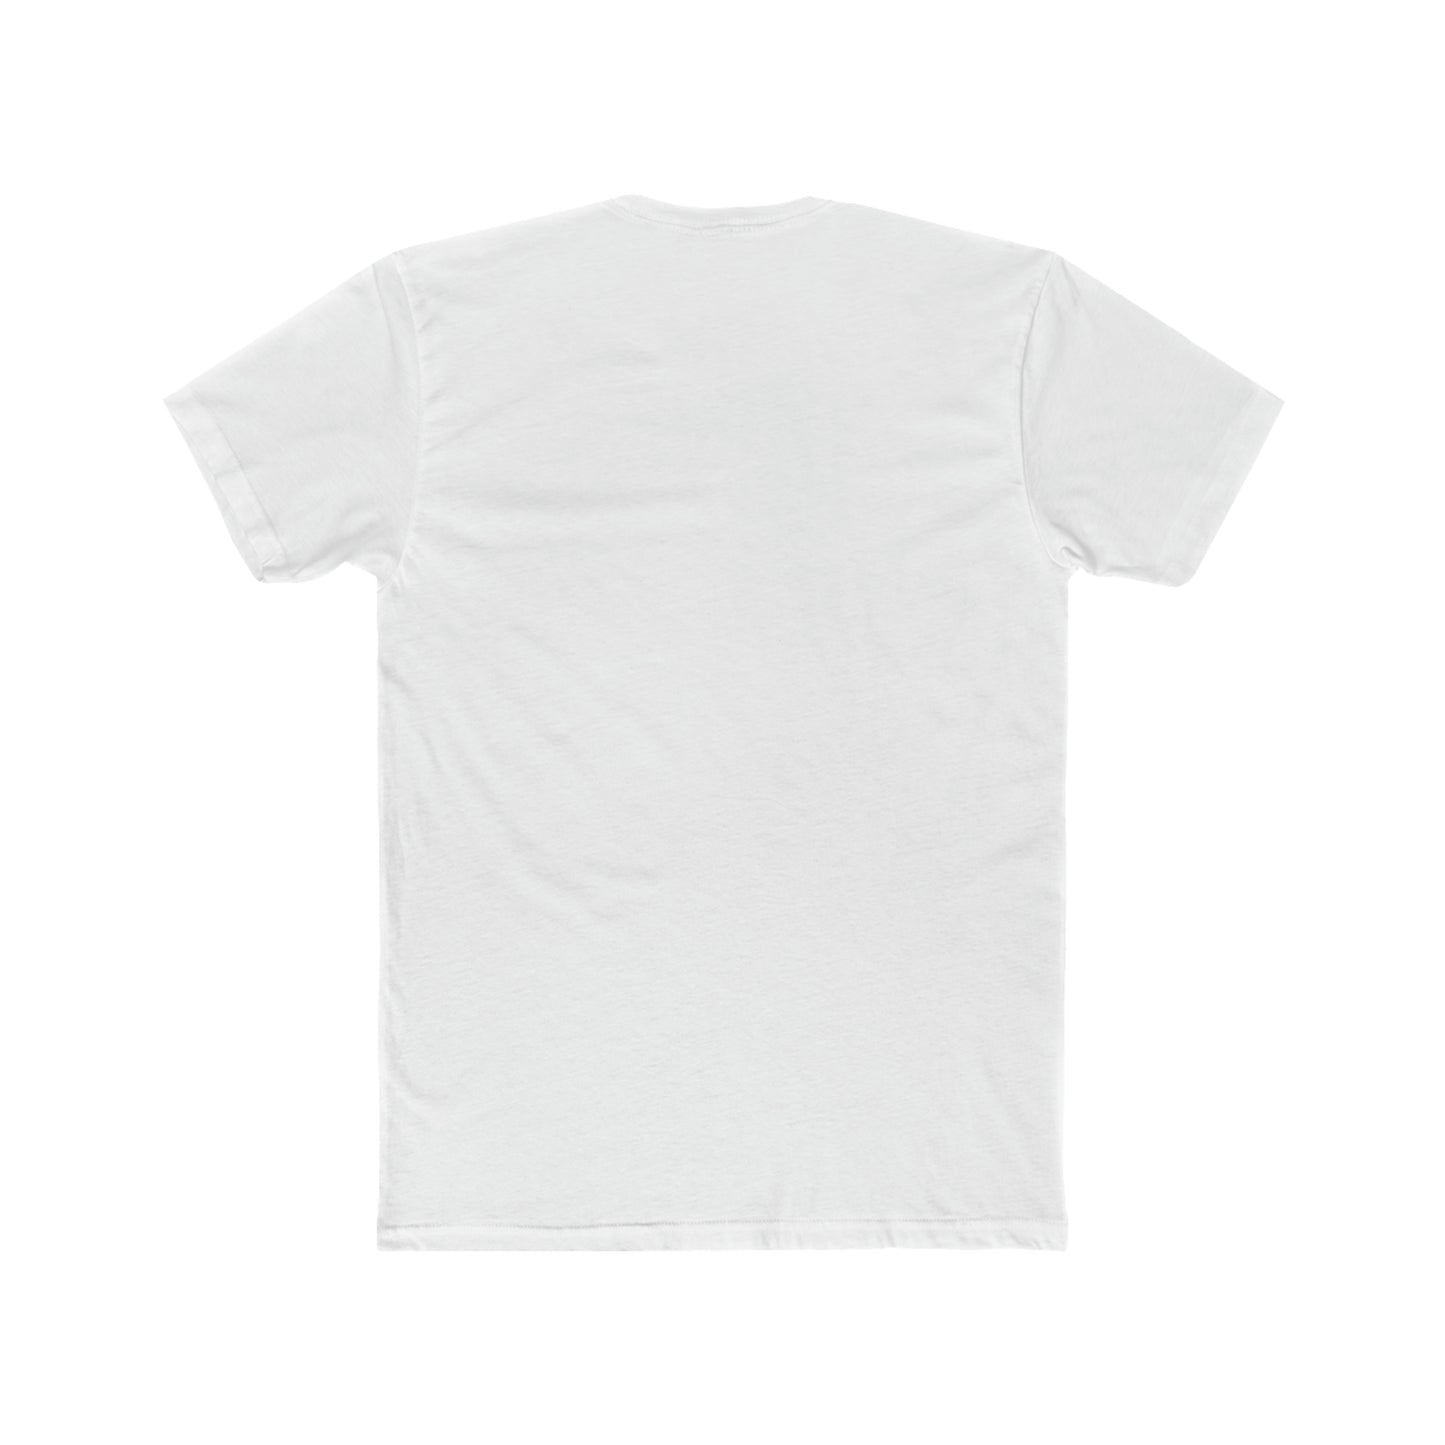 Tip Your Dealers t-shirt - Light blue on Black or White